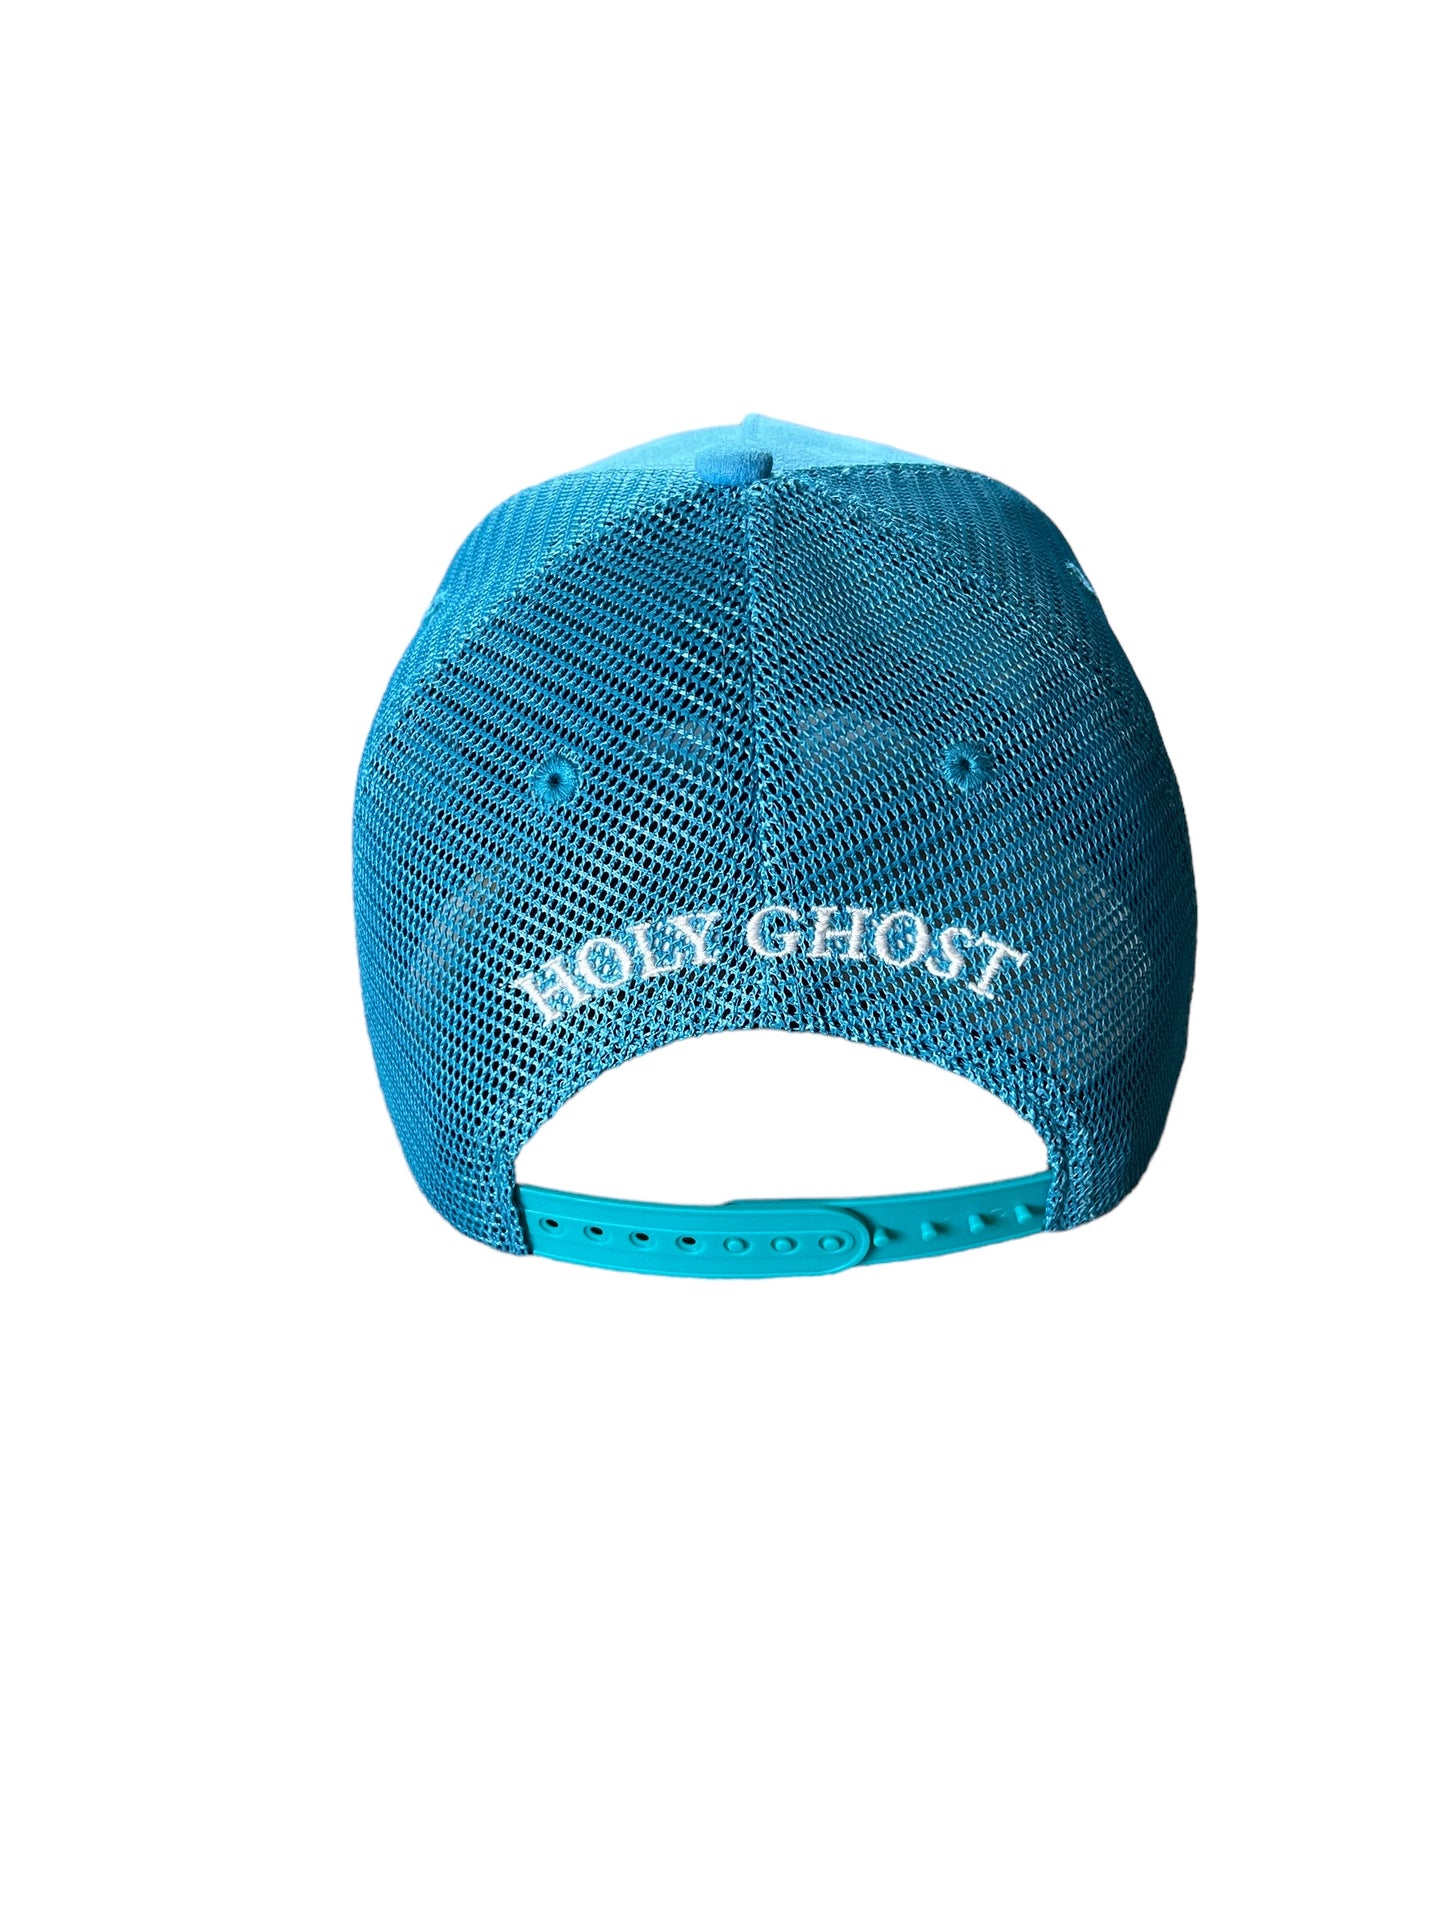 Holy Ghost Trucker Hat